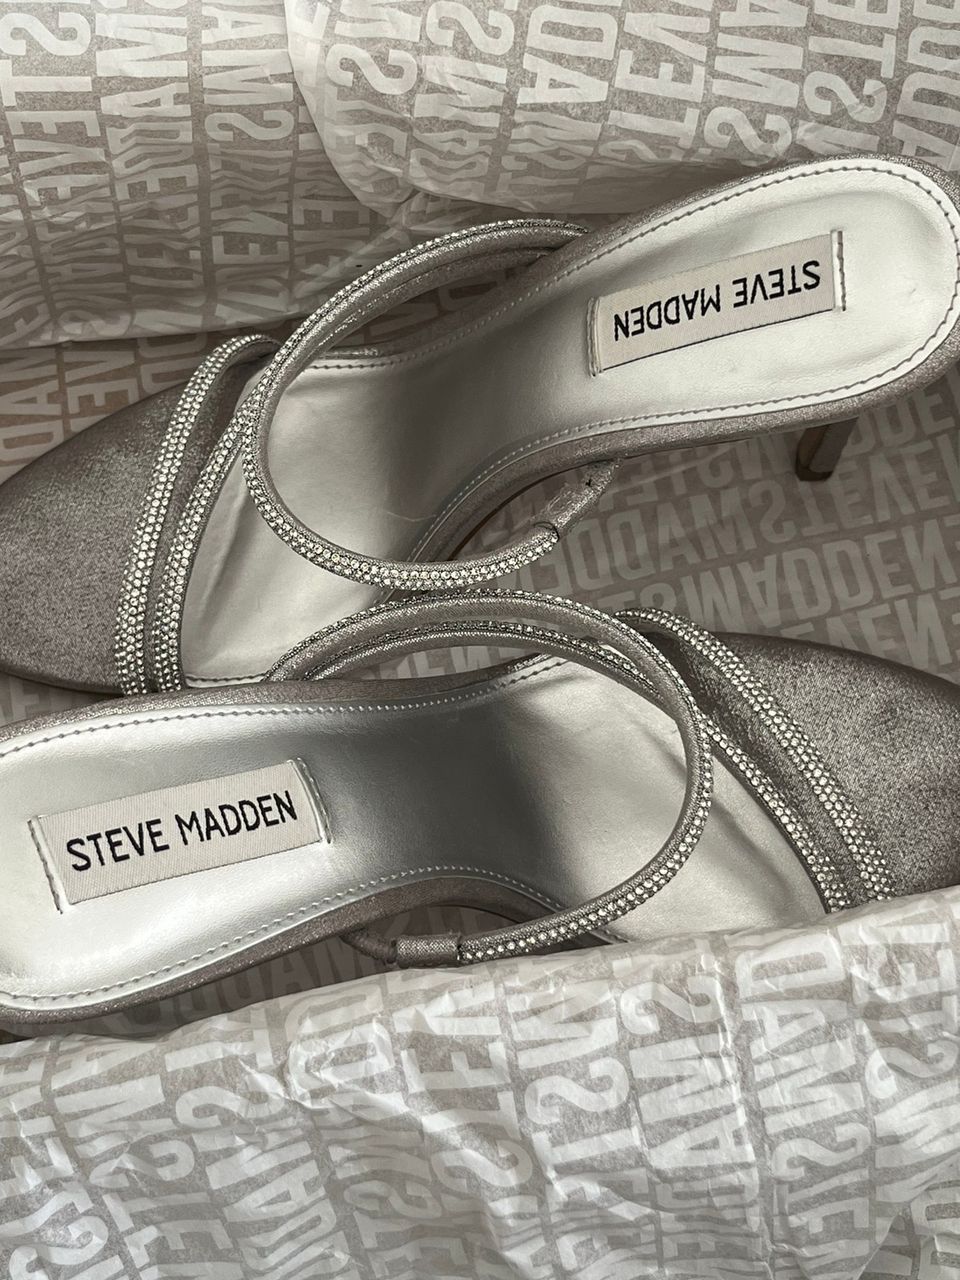 Steve Madden heels